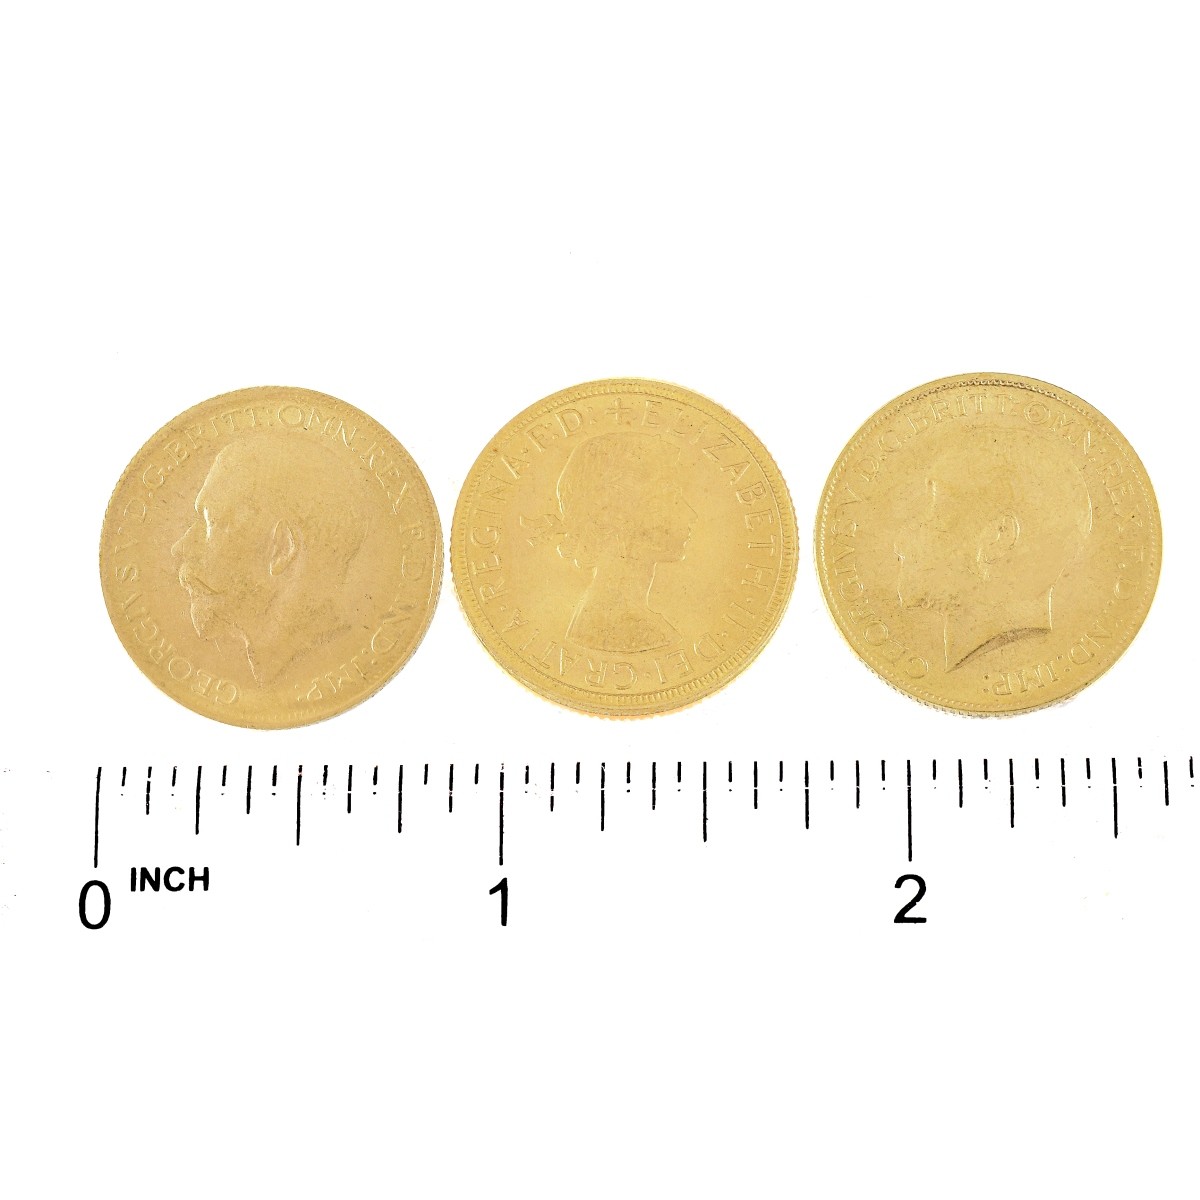 Three (3) British Gold Sovereigns